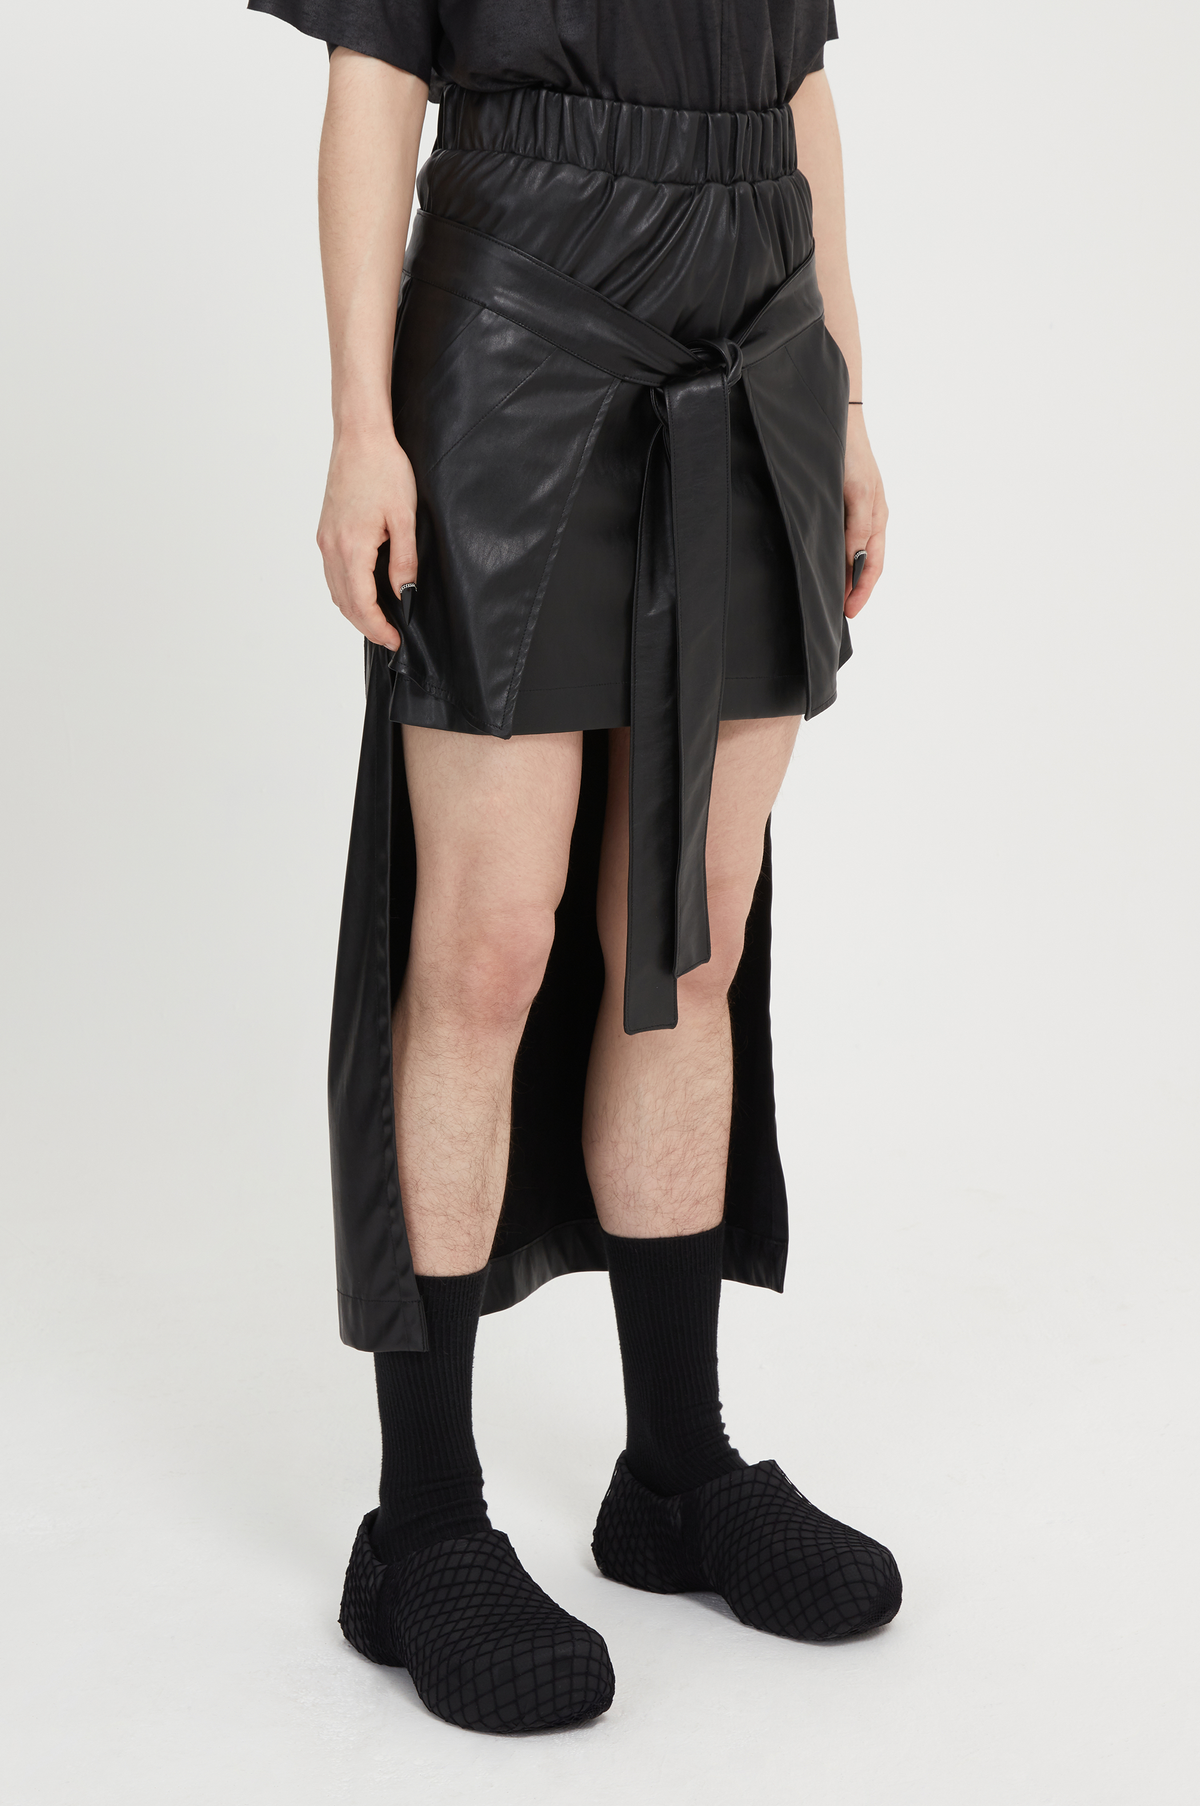 vegan leather skirt with detachable panel